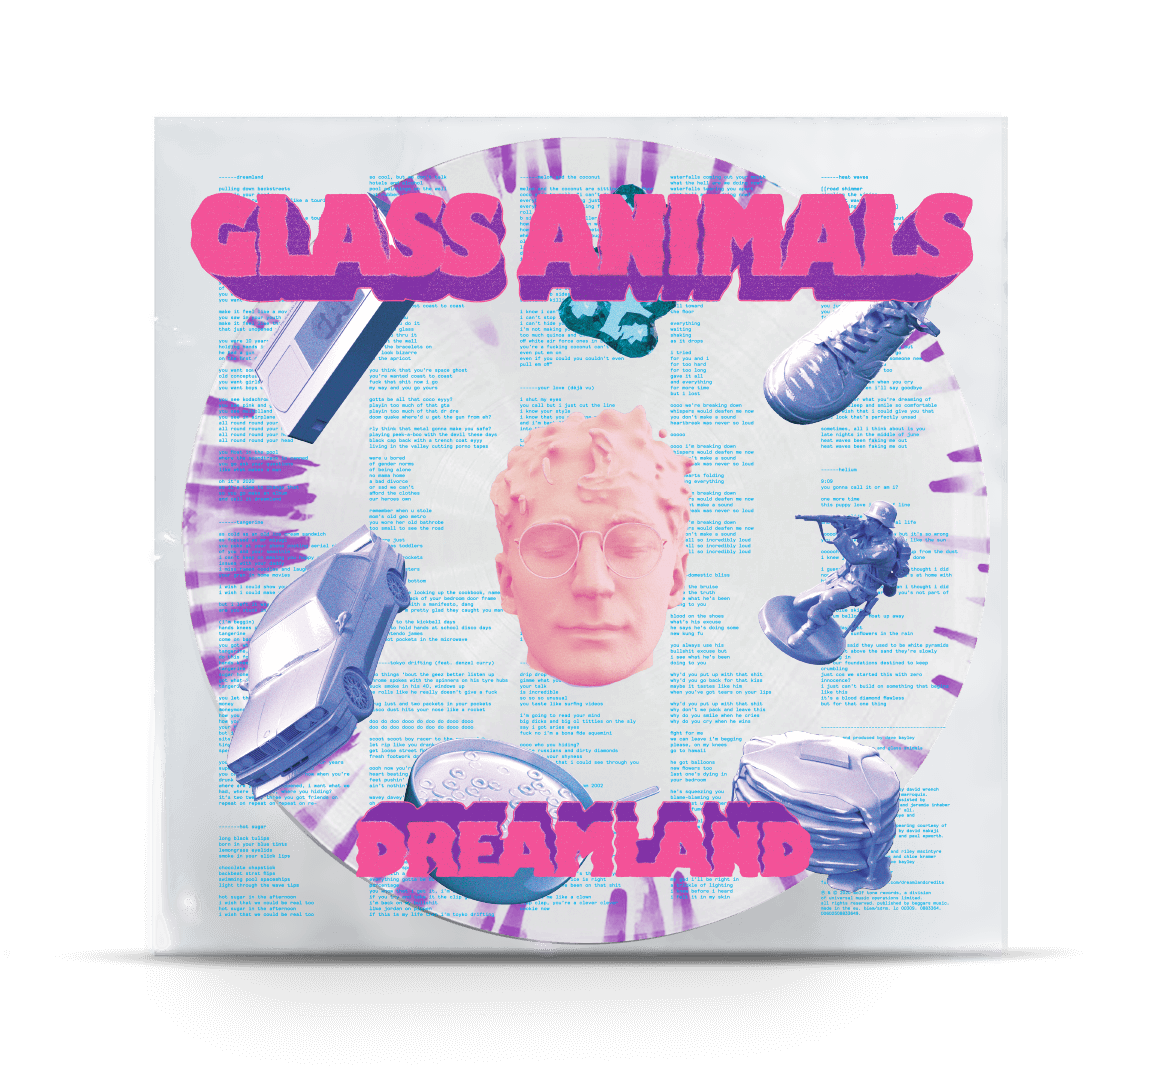 https://images.bravado.de/prod/product-assets/glass-animals/glass-animals/products/132880/web/295187/image-thumb__295187__3000x3000_original/Glass-Animals-Dreamland-Deluxe-Splatter-Vinyl-Limited-Edition-Vinyl-132880-295187-1663516540.f5ed2341.png